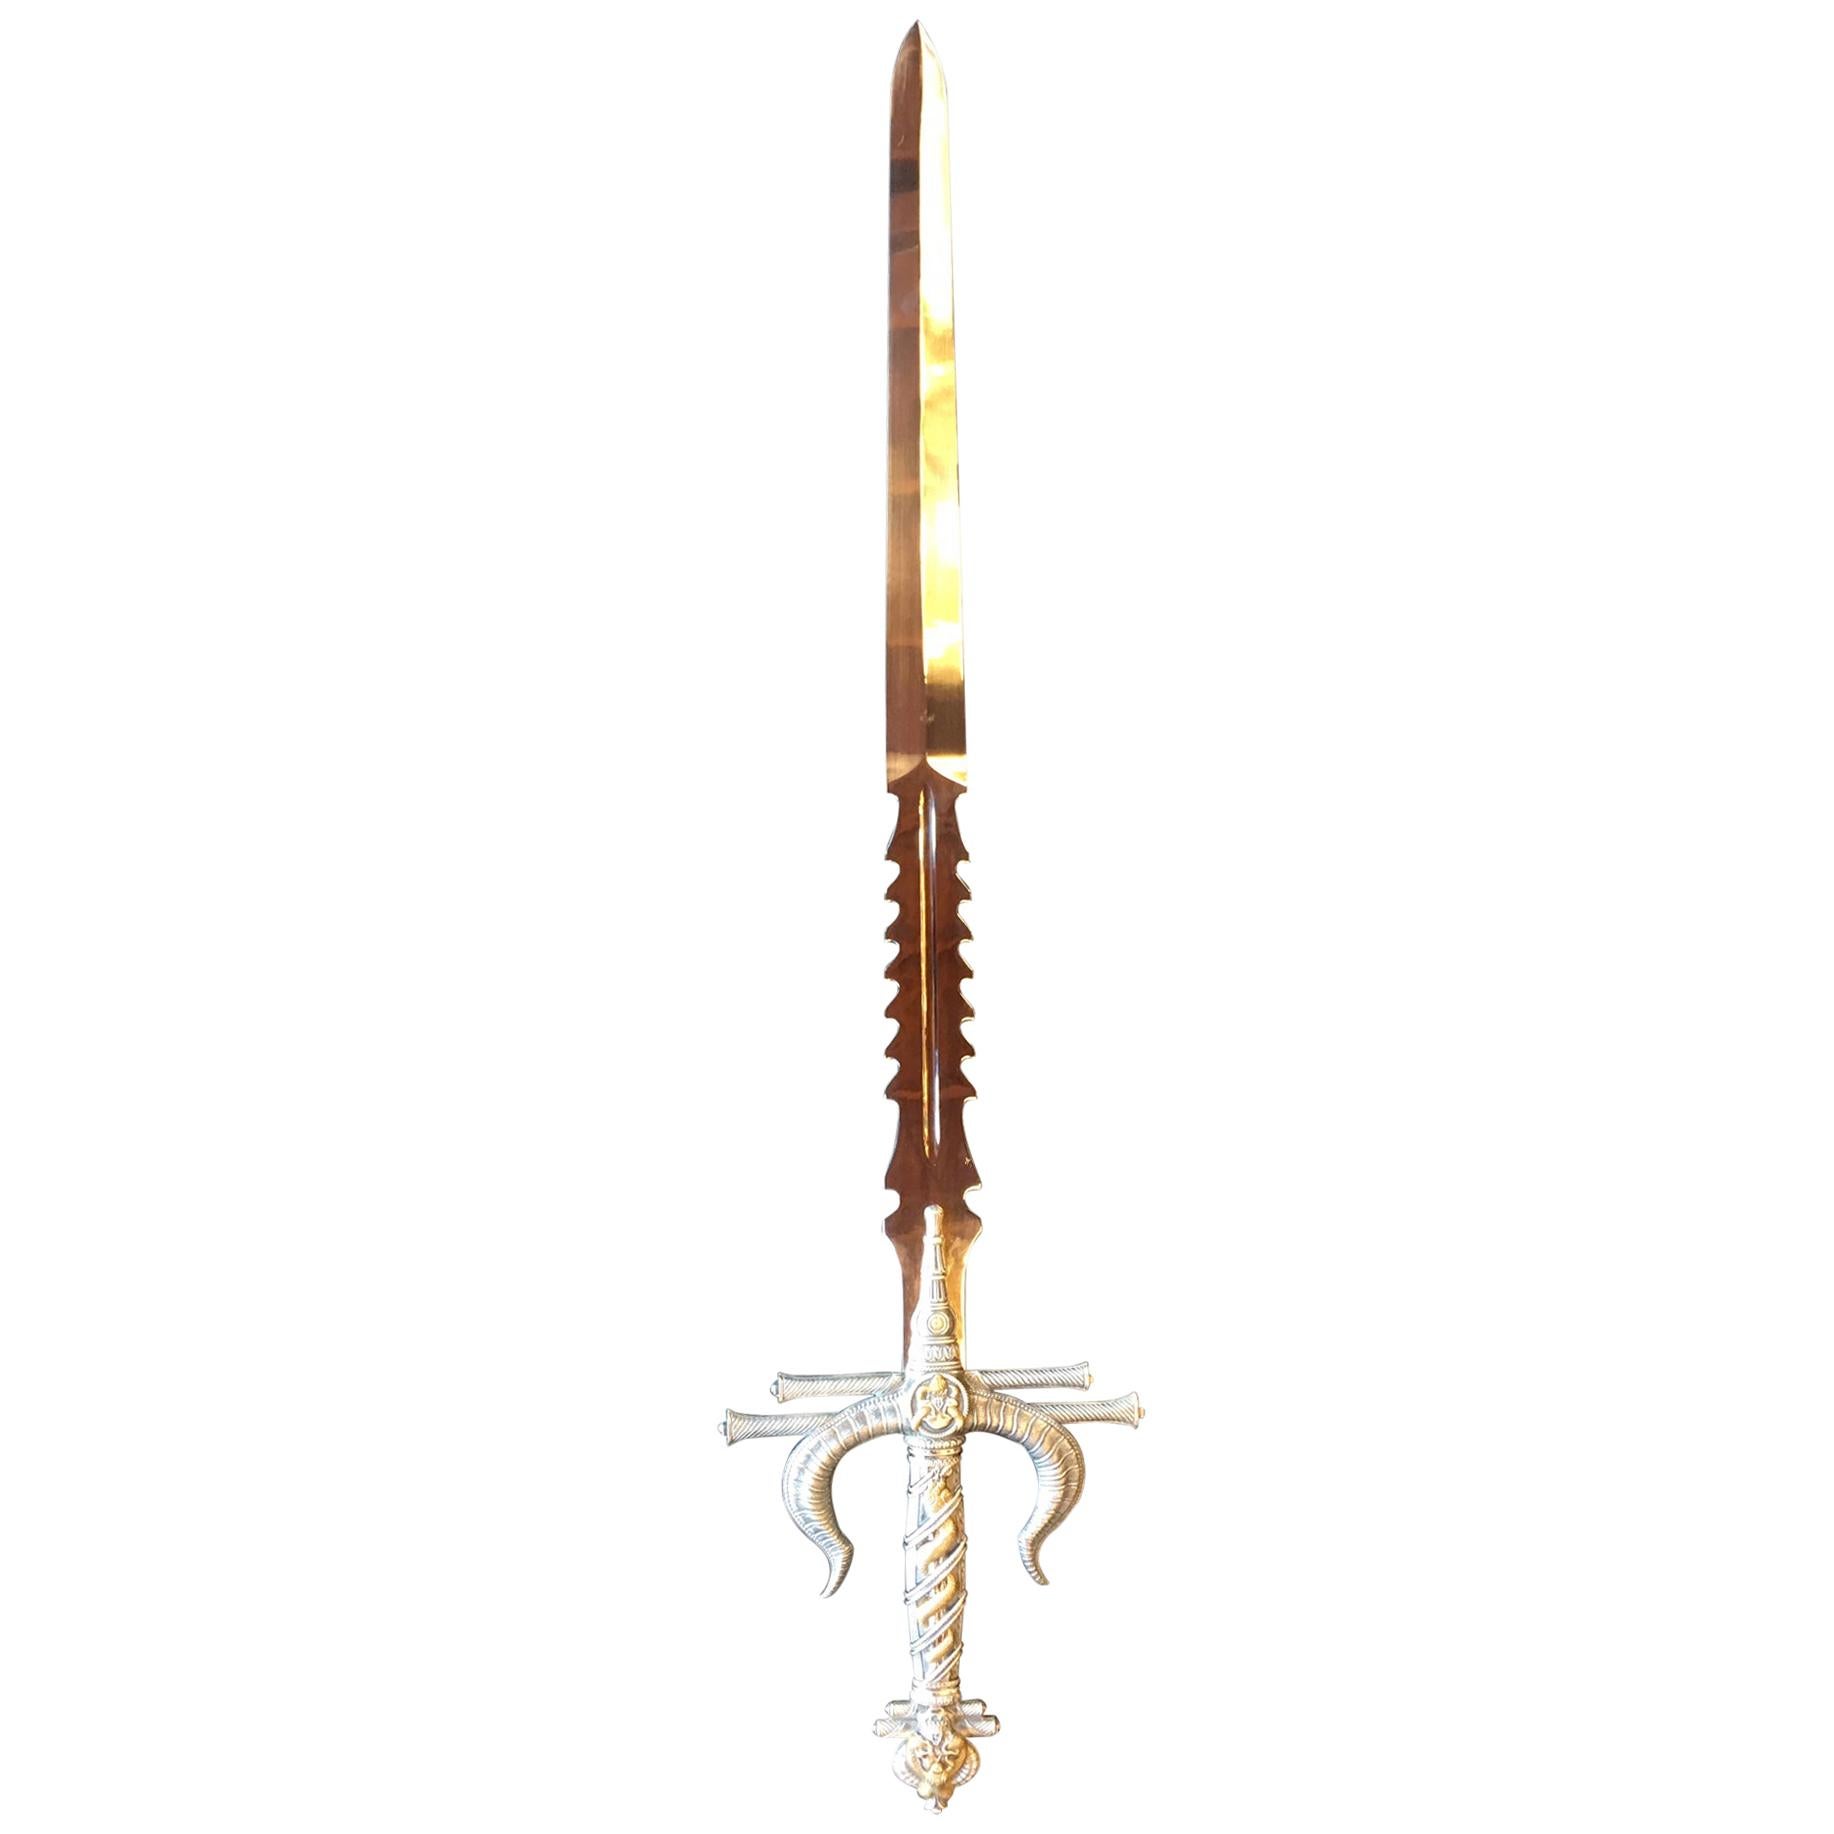 Decorative Spanish Metal Sword